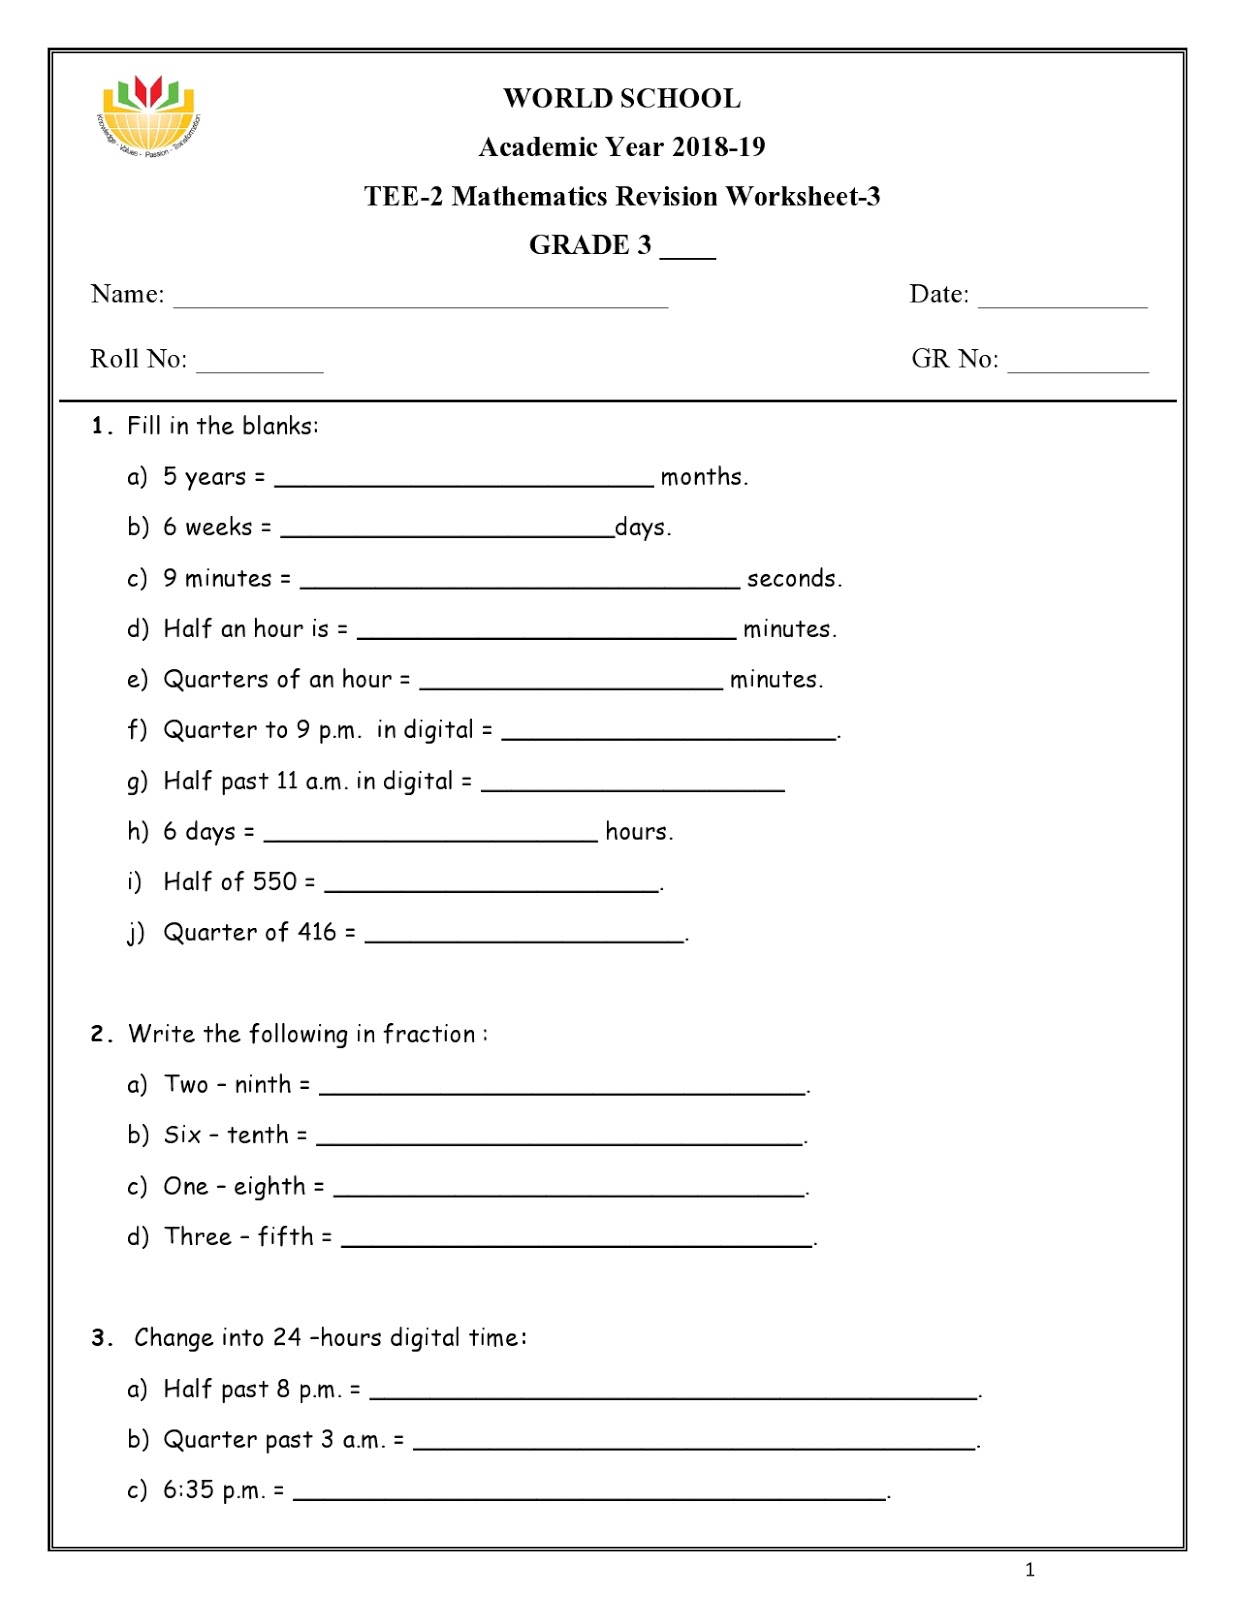 birla-world-school-oman-revision-worksheets-for-grade-3-as-on-09-05-2019